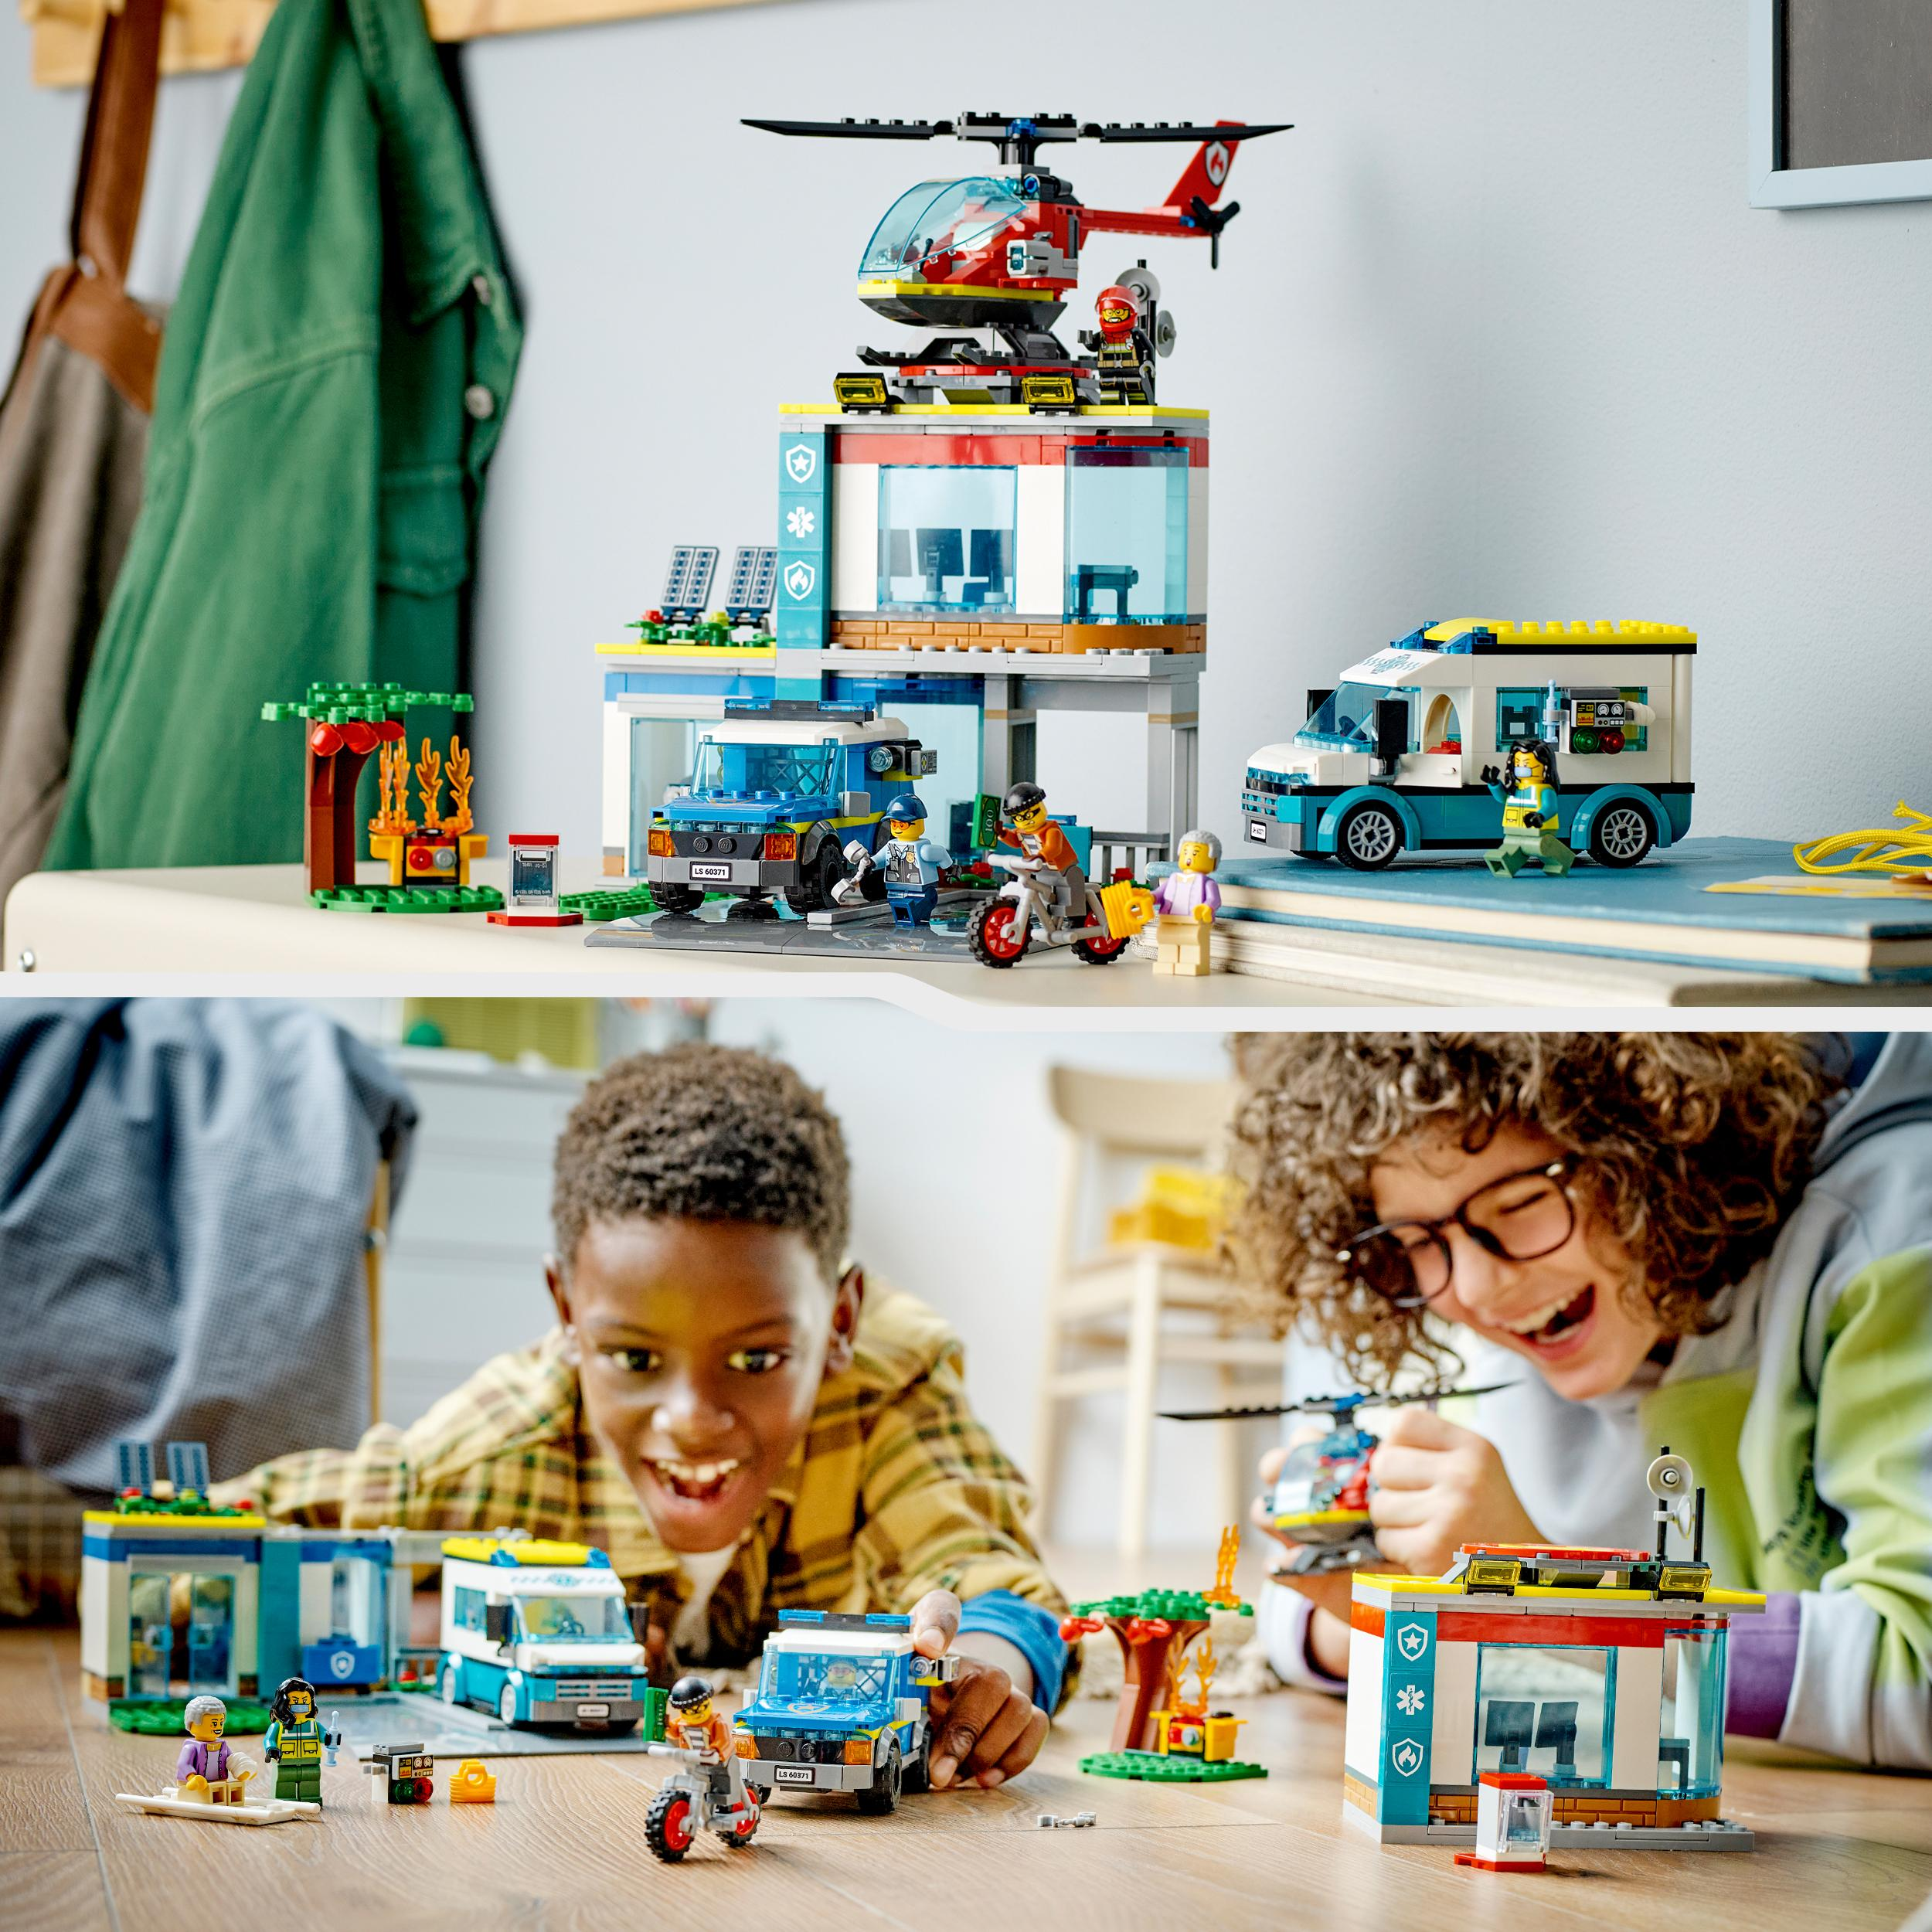 LEGO City 60371 Mehrfarbig Bausatz, der Rettungsfahrzeuge Hauptquartier